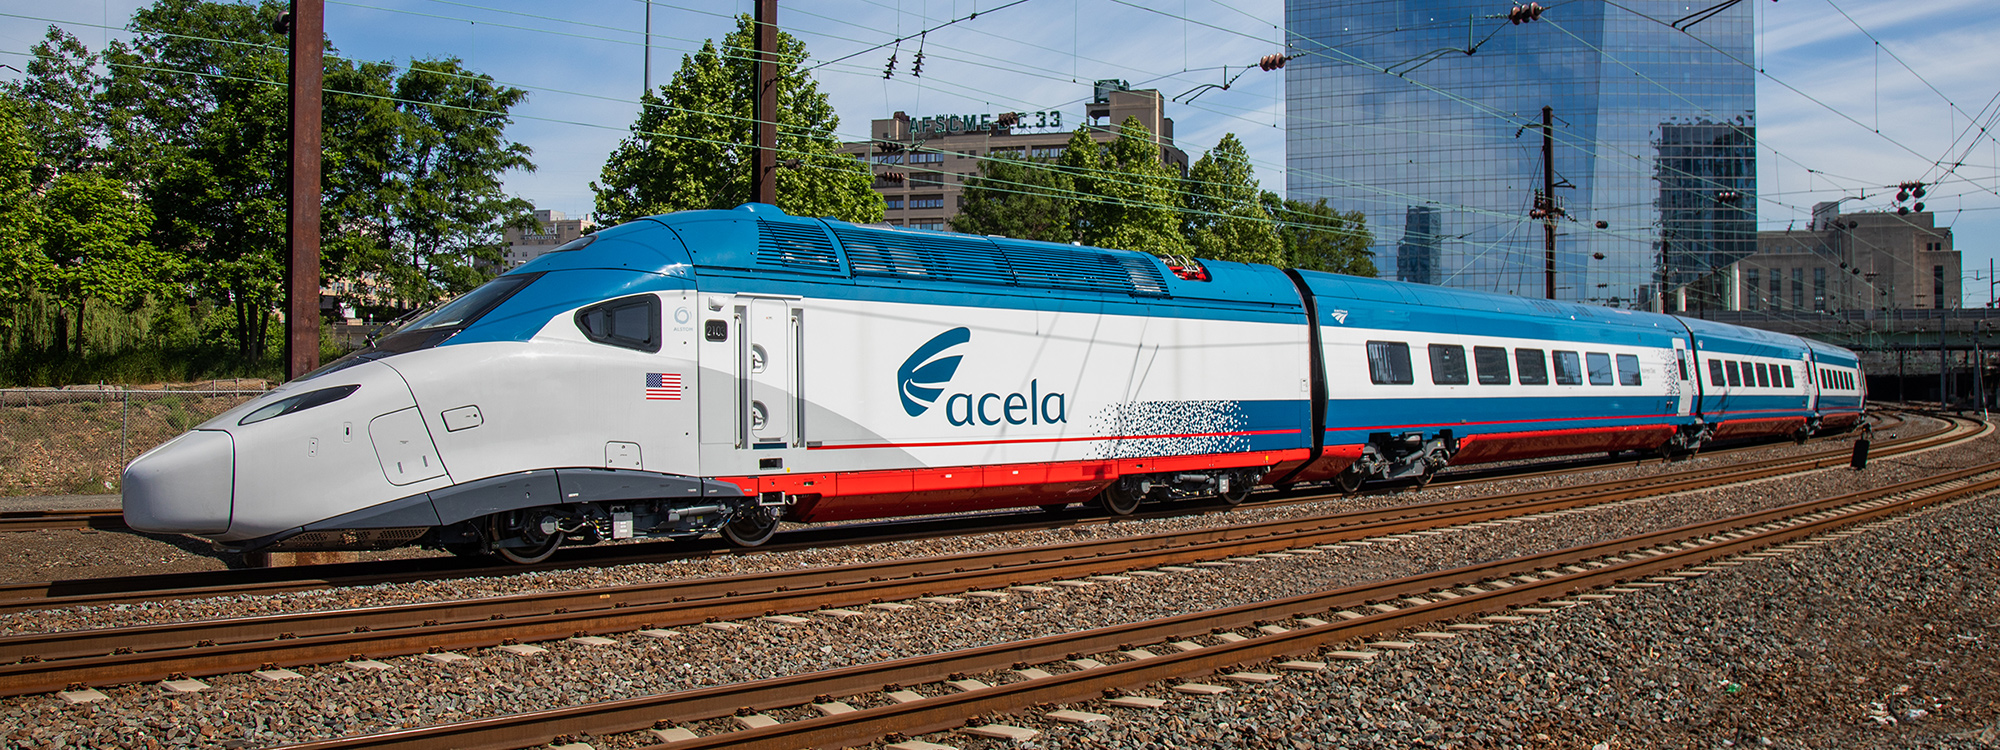 Amtrak's New Acela train